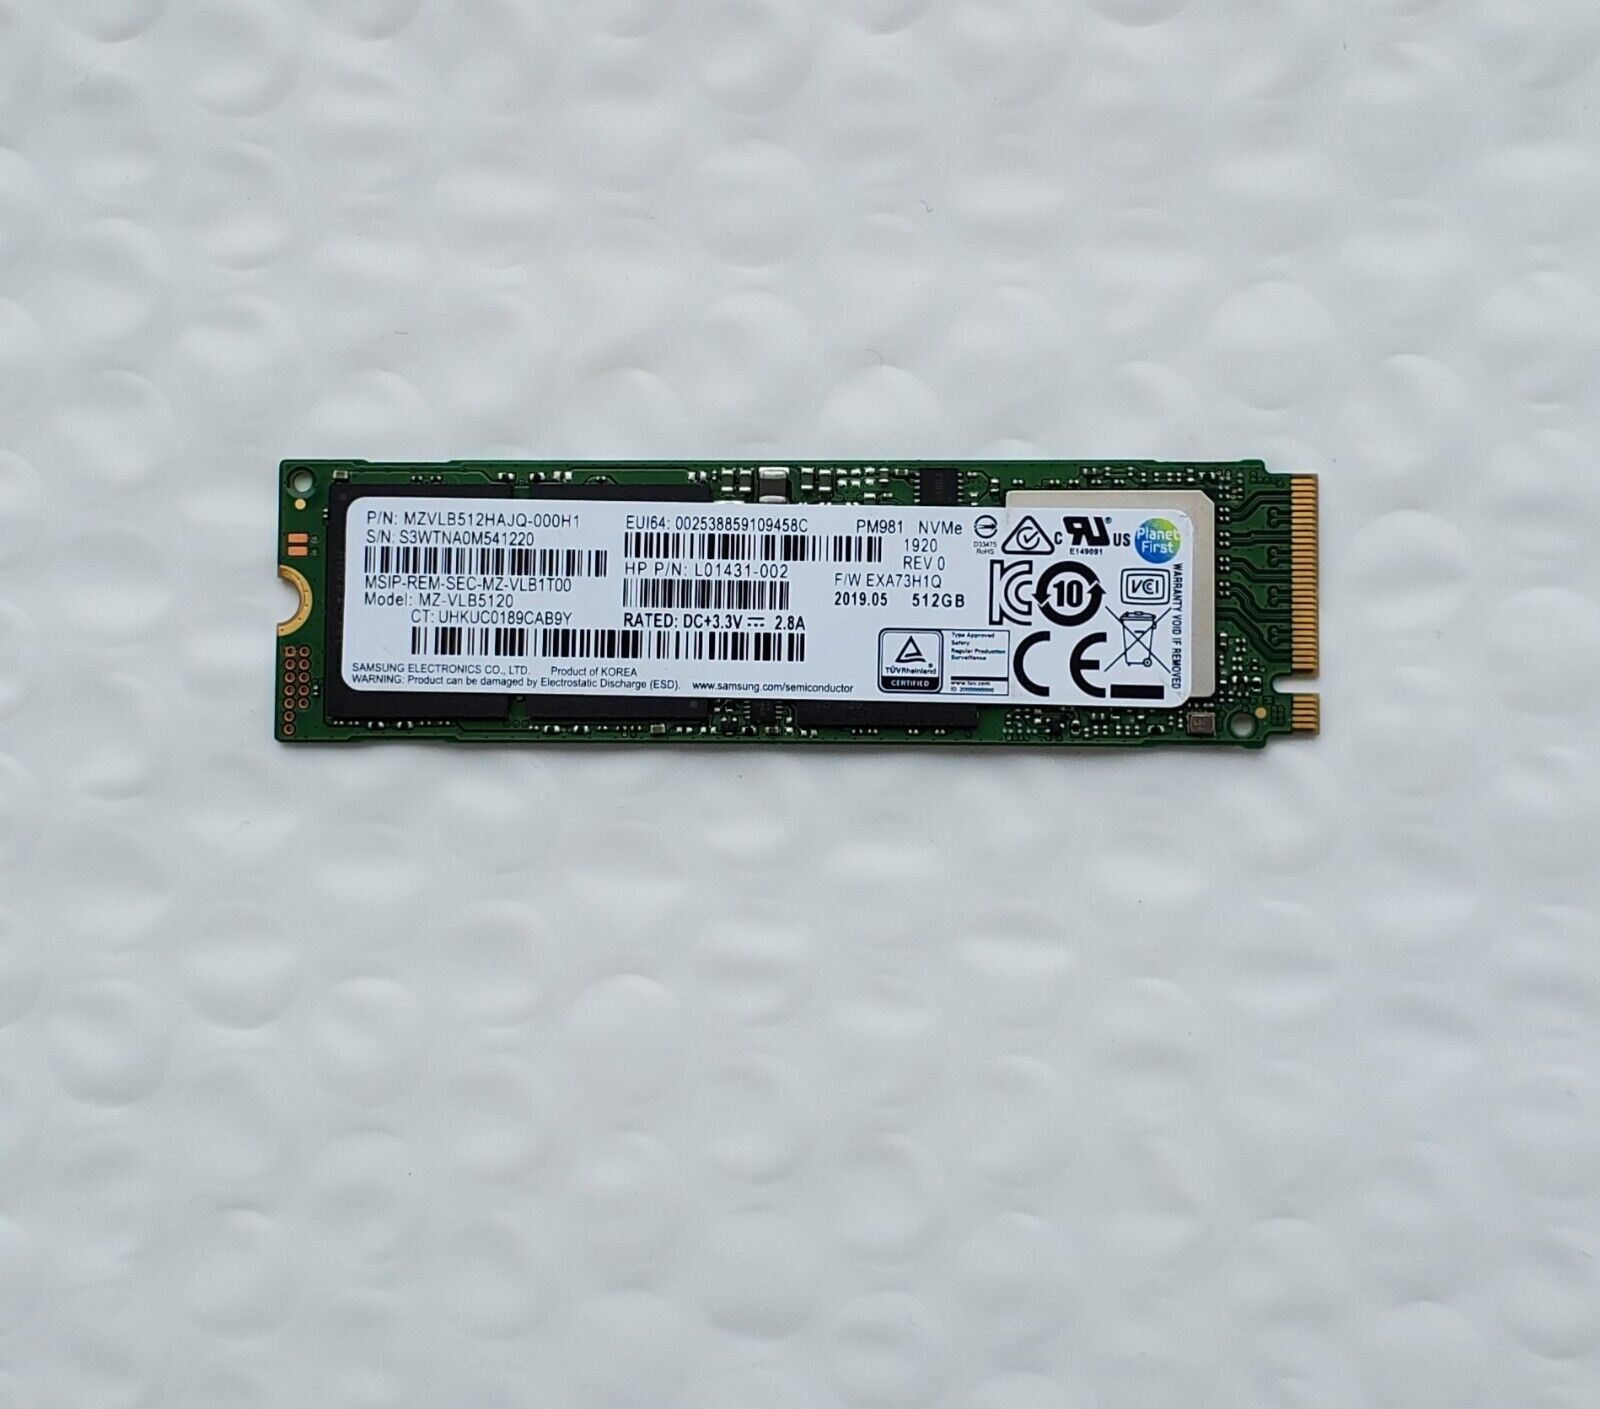 Samsung 512GB PM981 (MZVLB512HBJQ000H1) NVMe Ssd M.2 (90 day warranty) (Grade A)